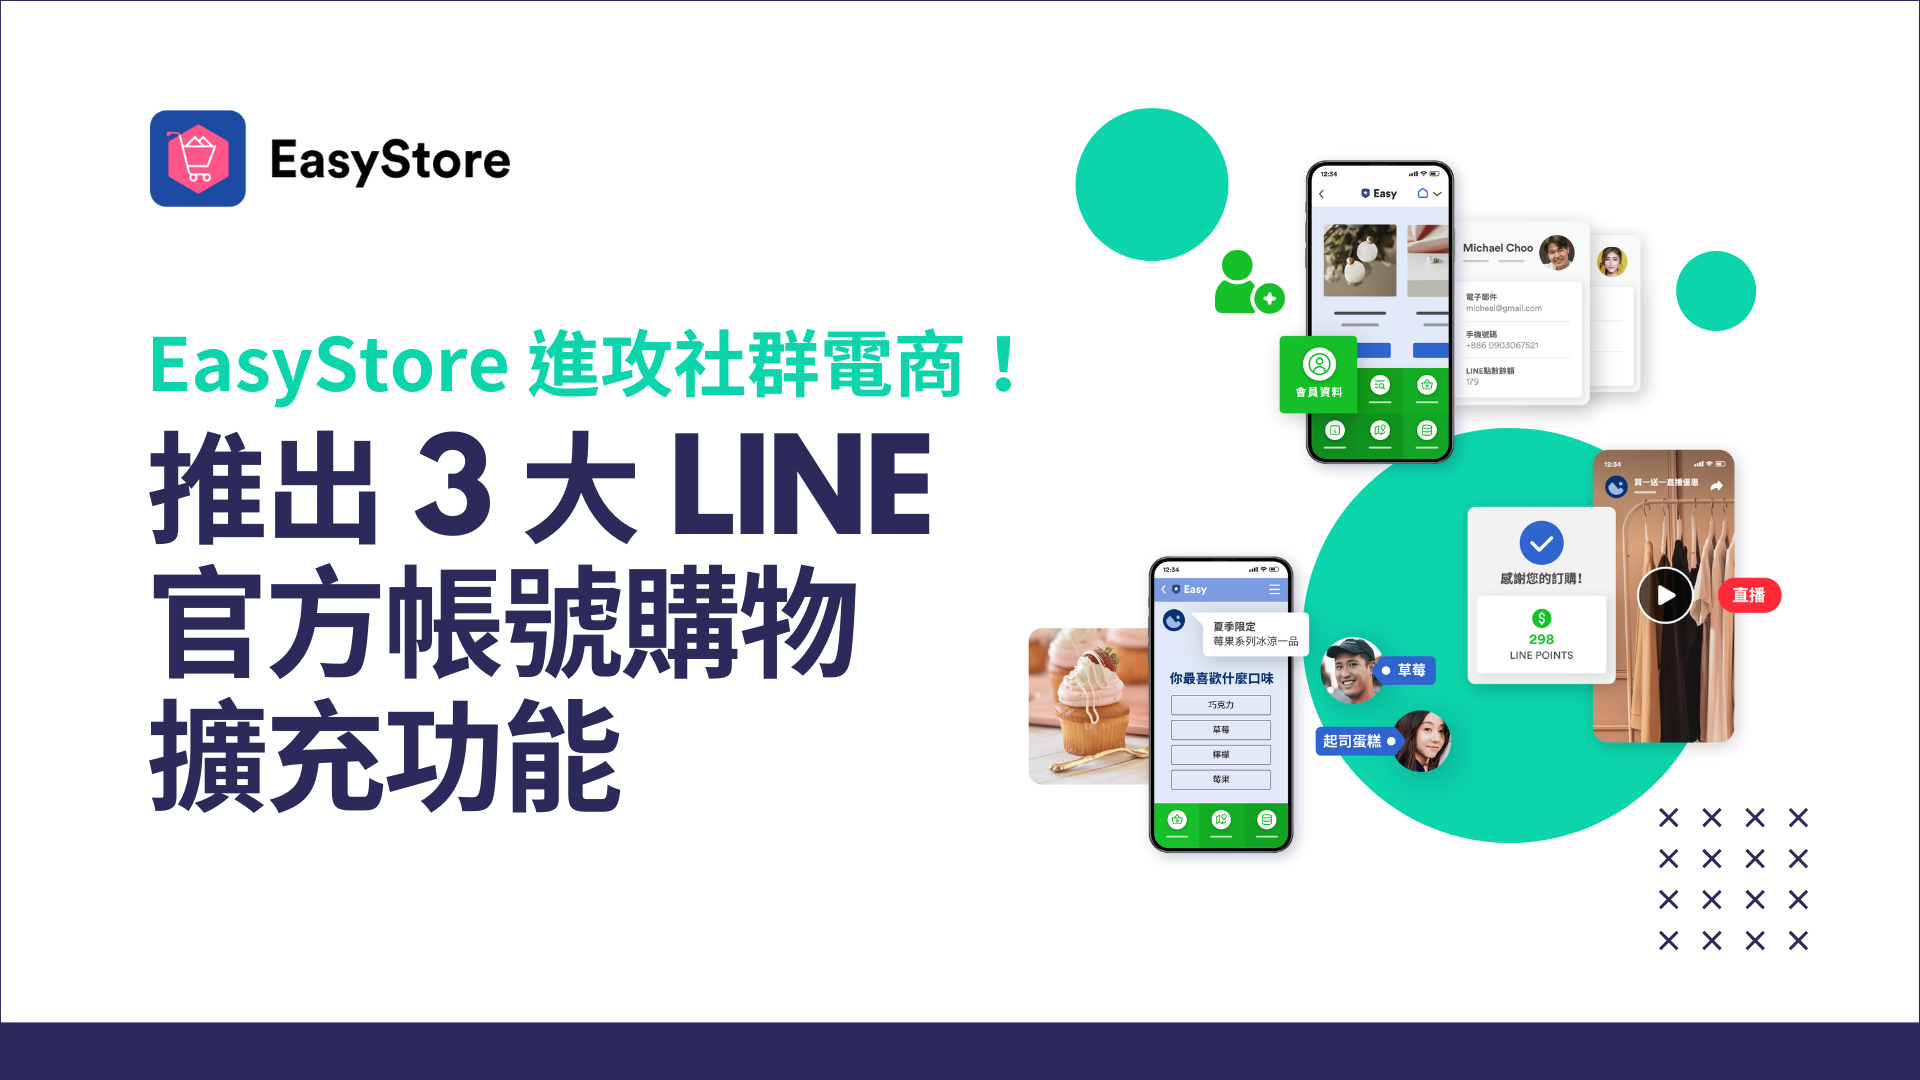 EasyStore 進攻社群電商！推出 3 大 LINE 官方帳號購物擴充功能 | EasyStore